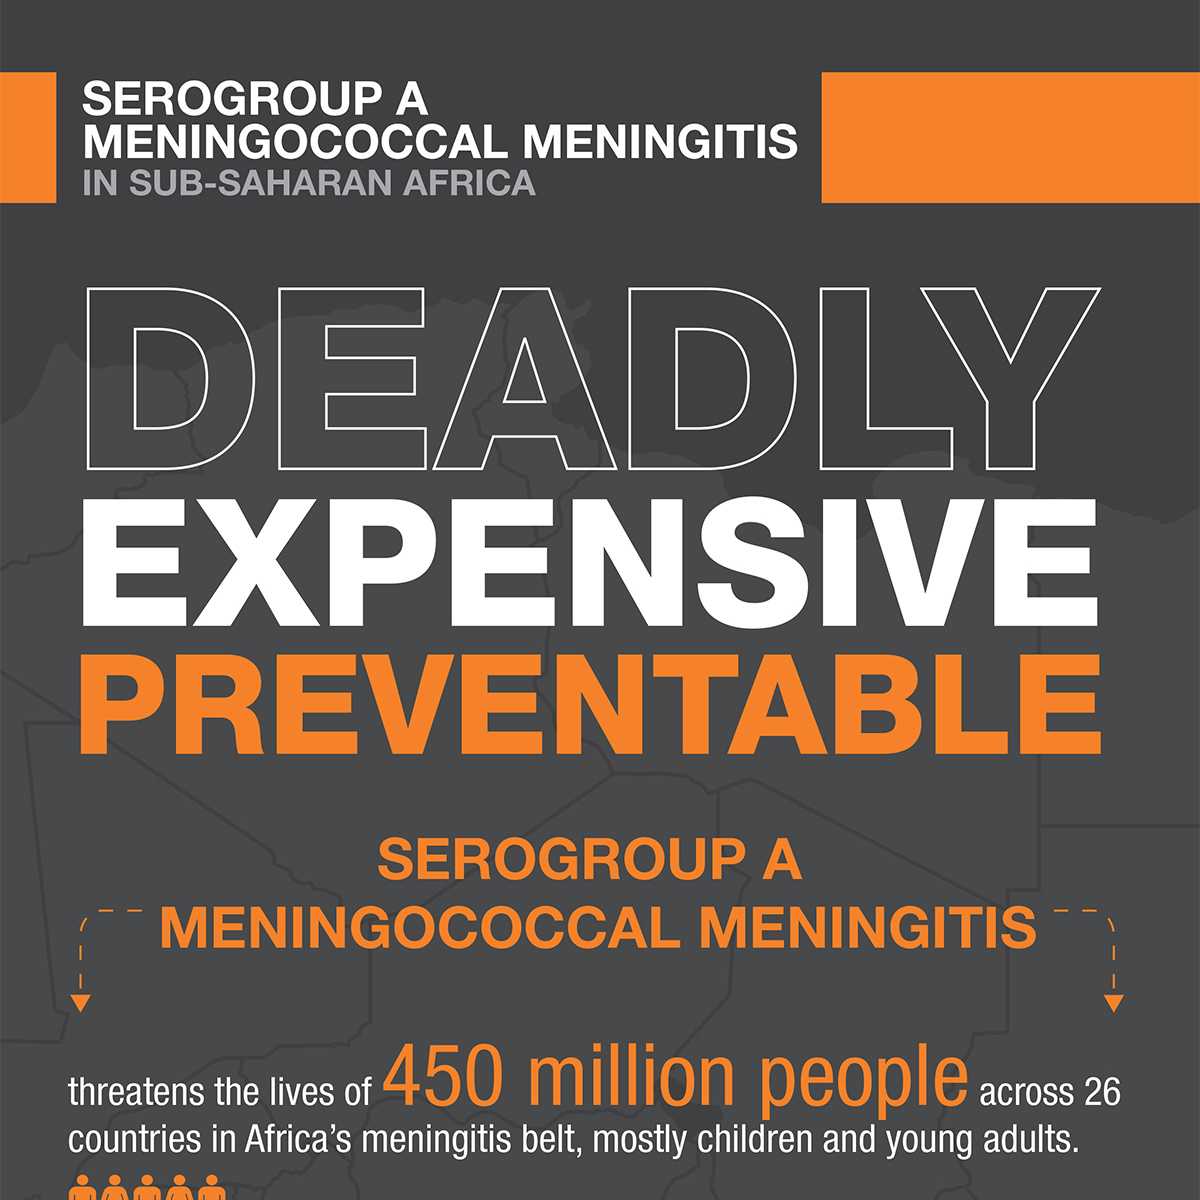 Meningitis A